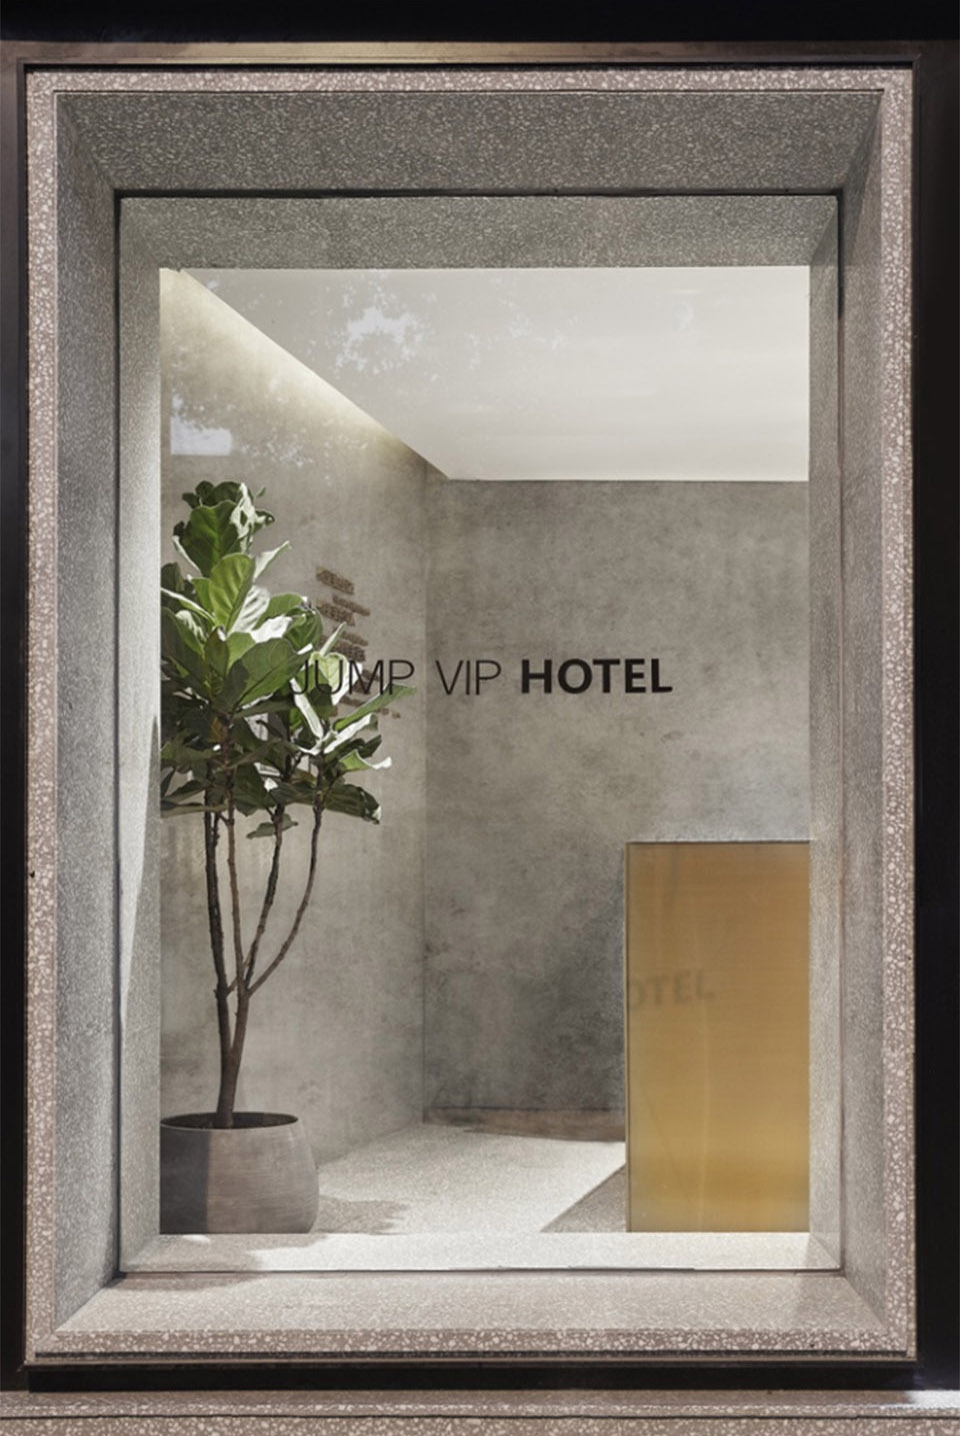 017-the-jump-bund-hotel-renovation-in-shanghai-by-muxin-design-studio-960x1436.jpg